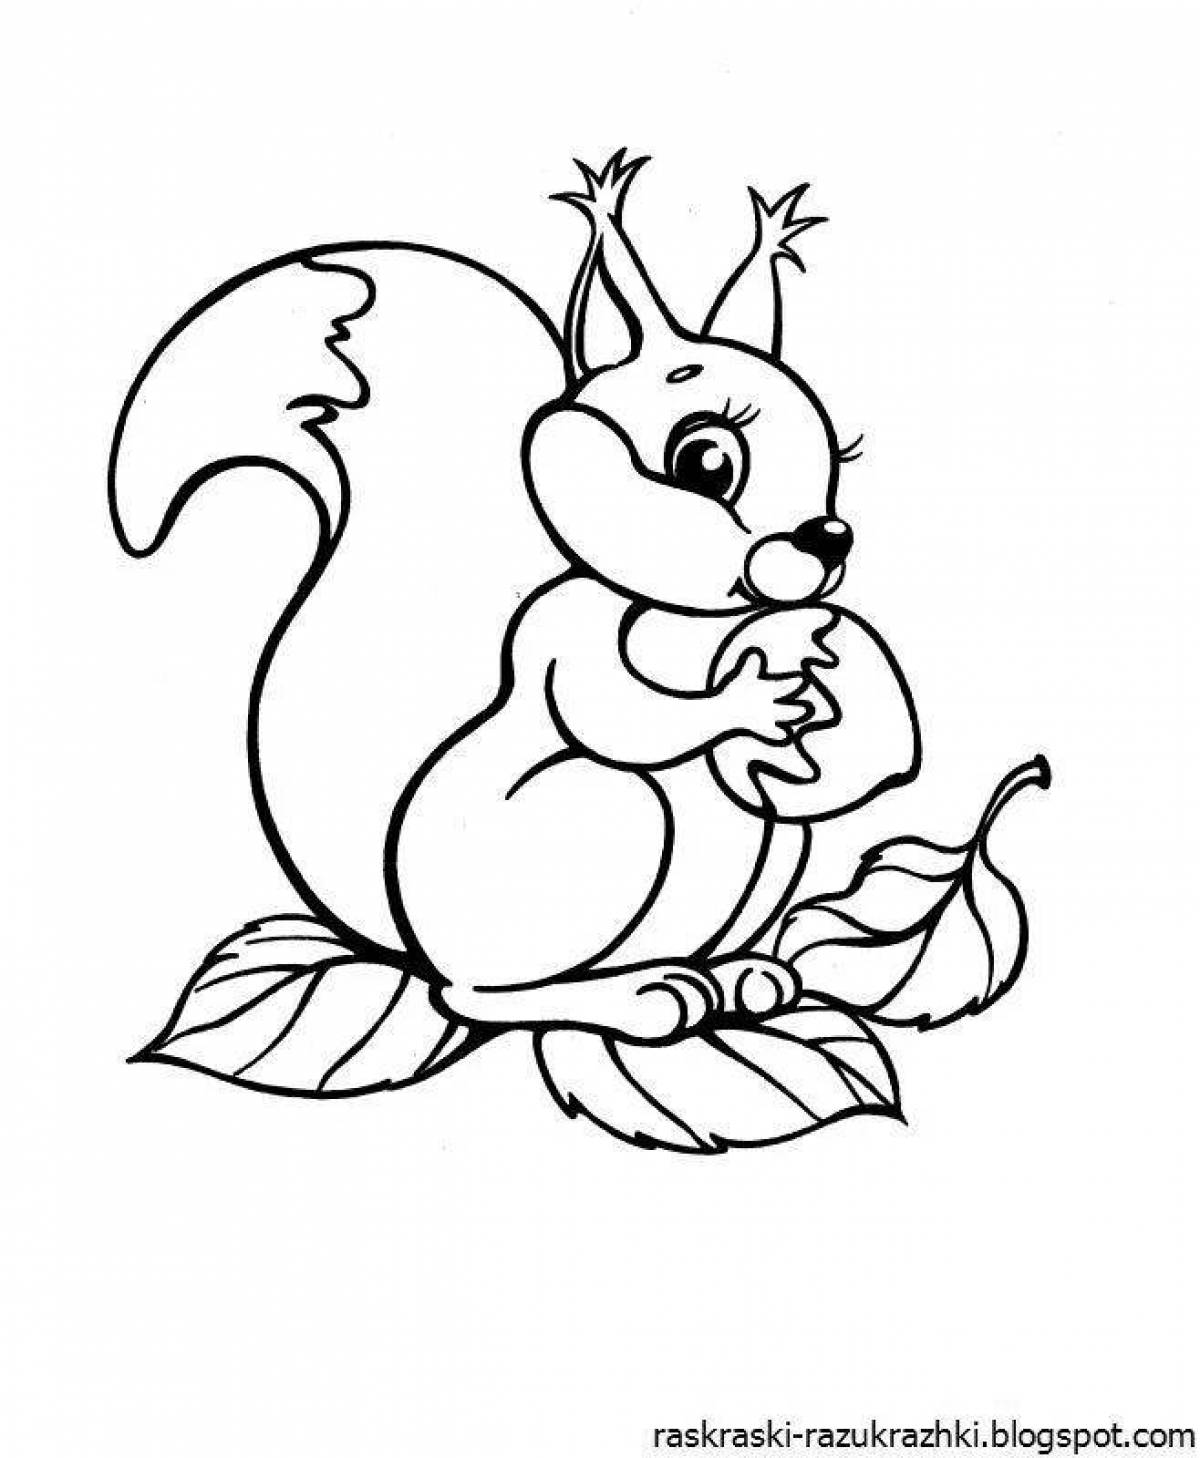 Impressive squirrel coloring book for kids